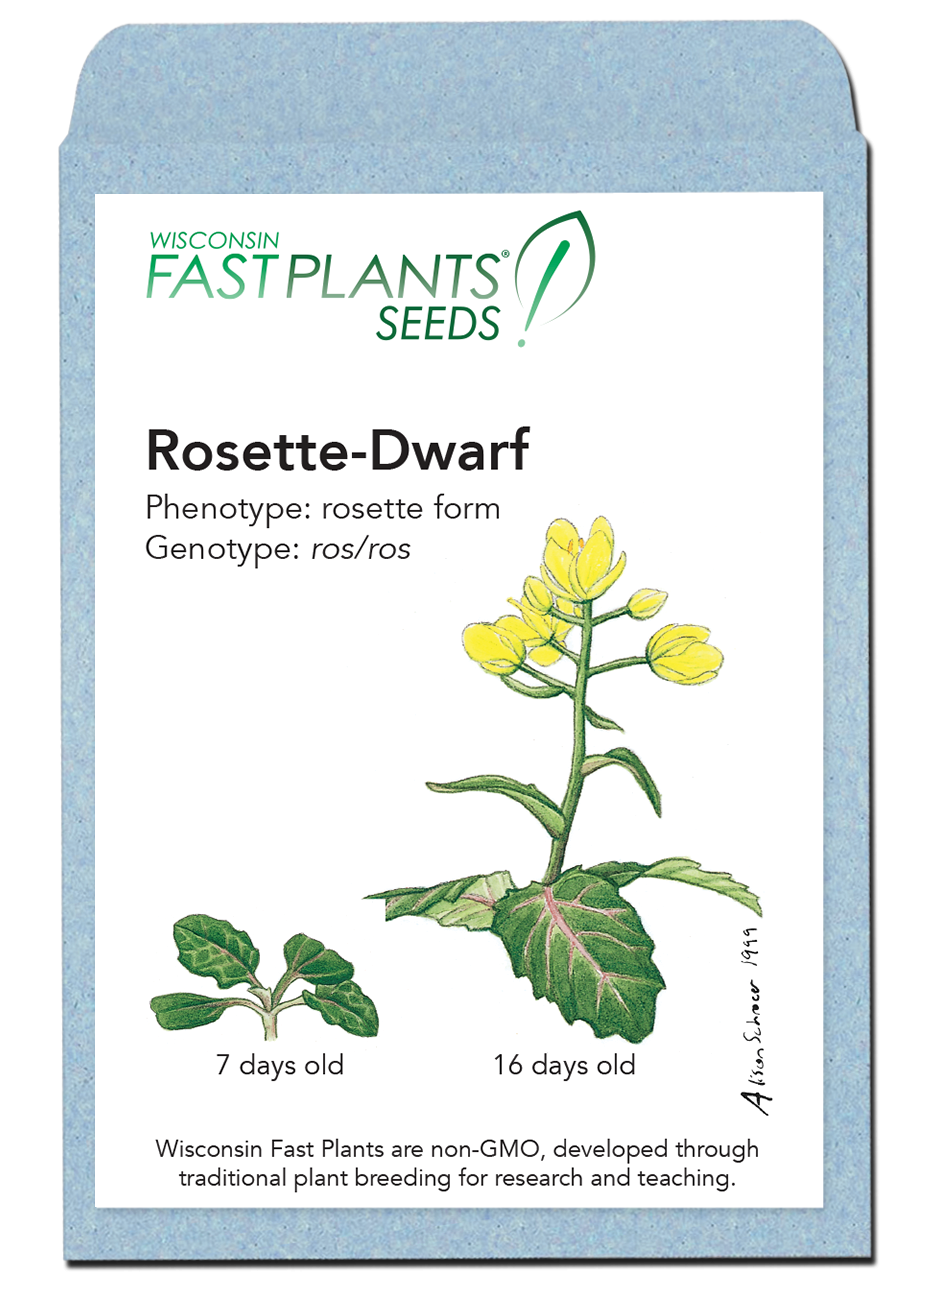 Rosette-Dwarf Fast Plants seed packet